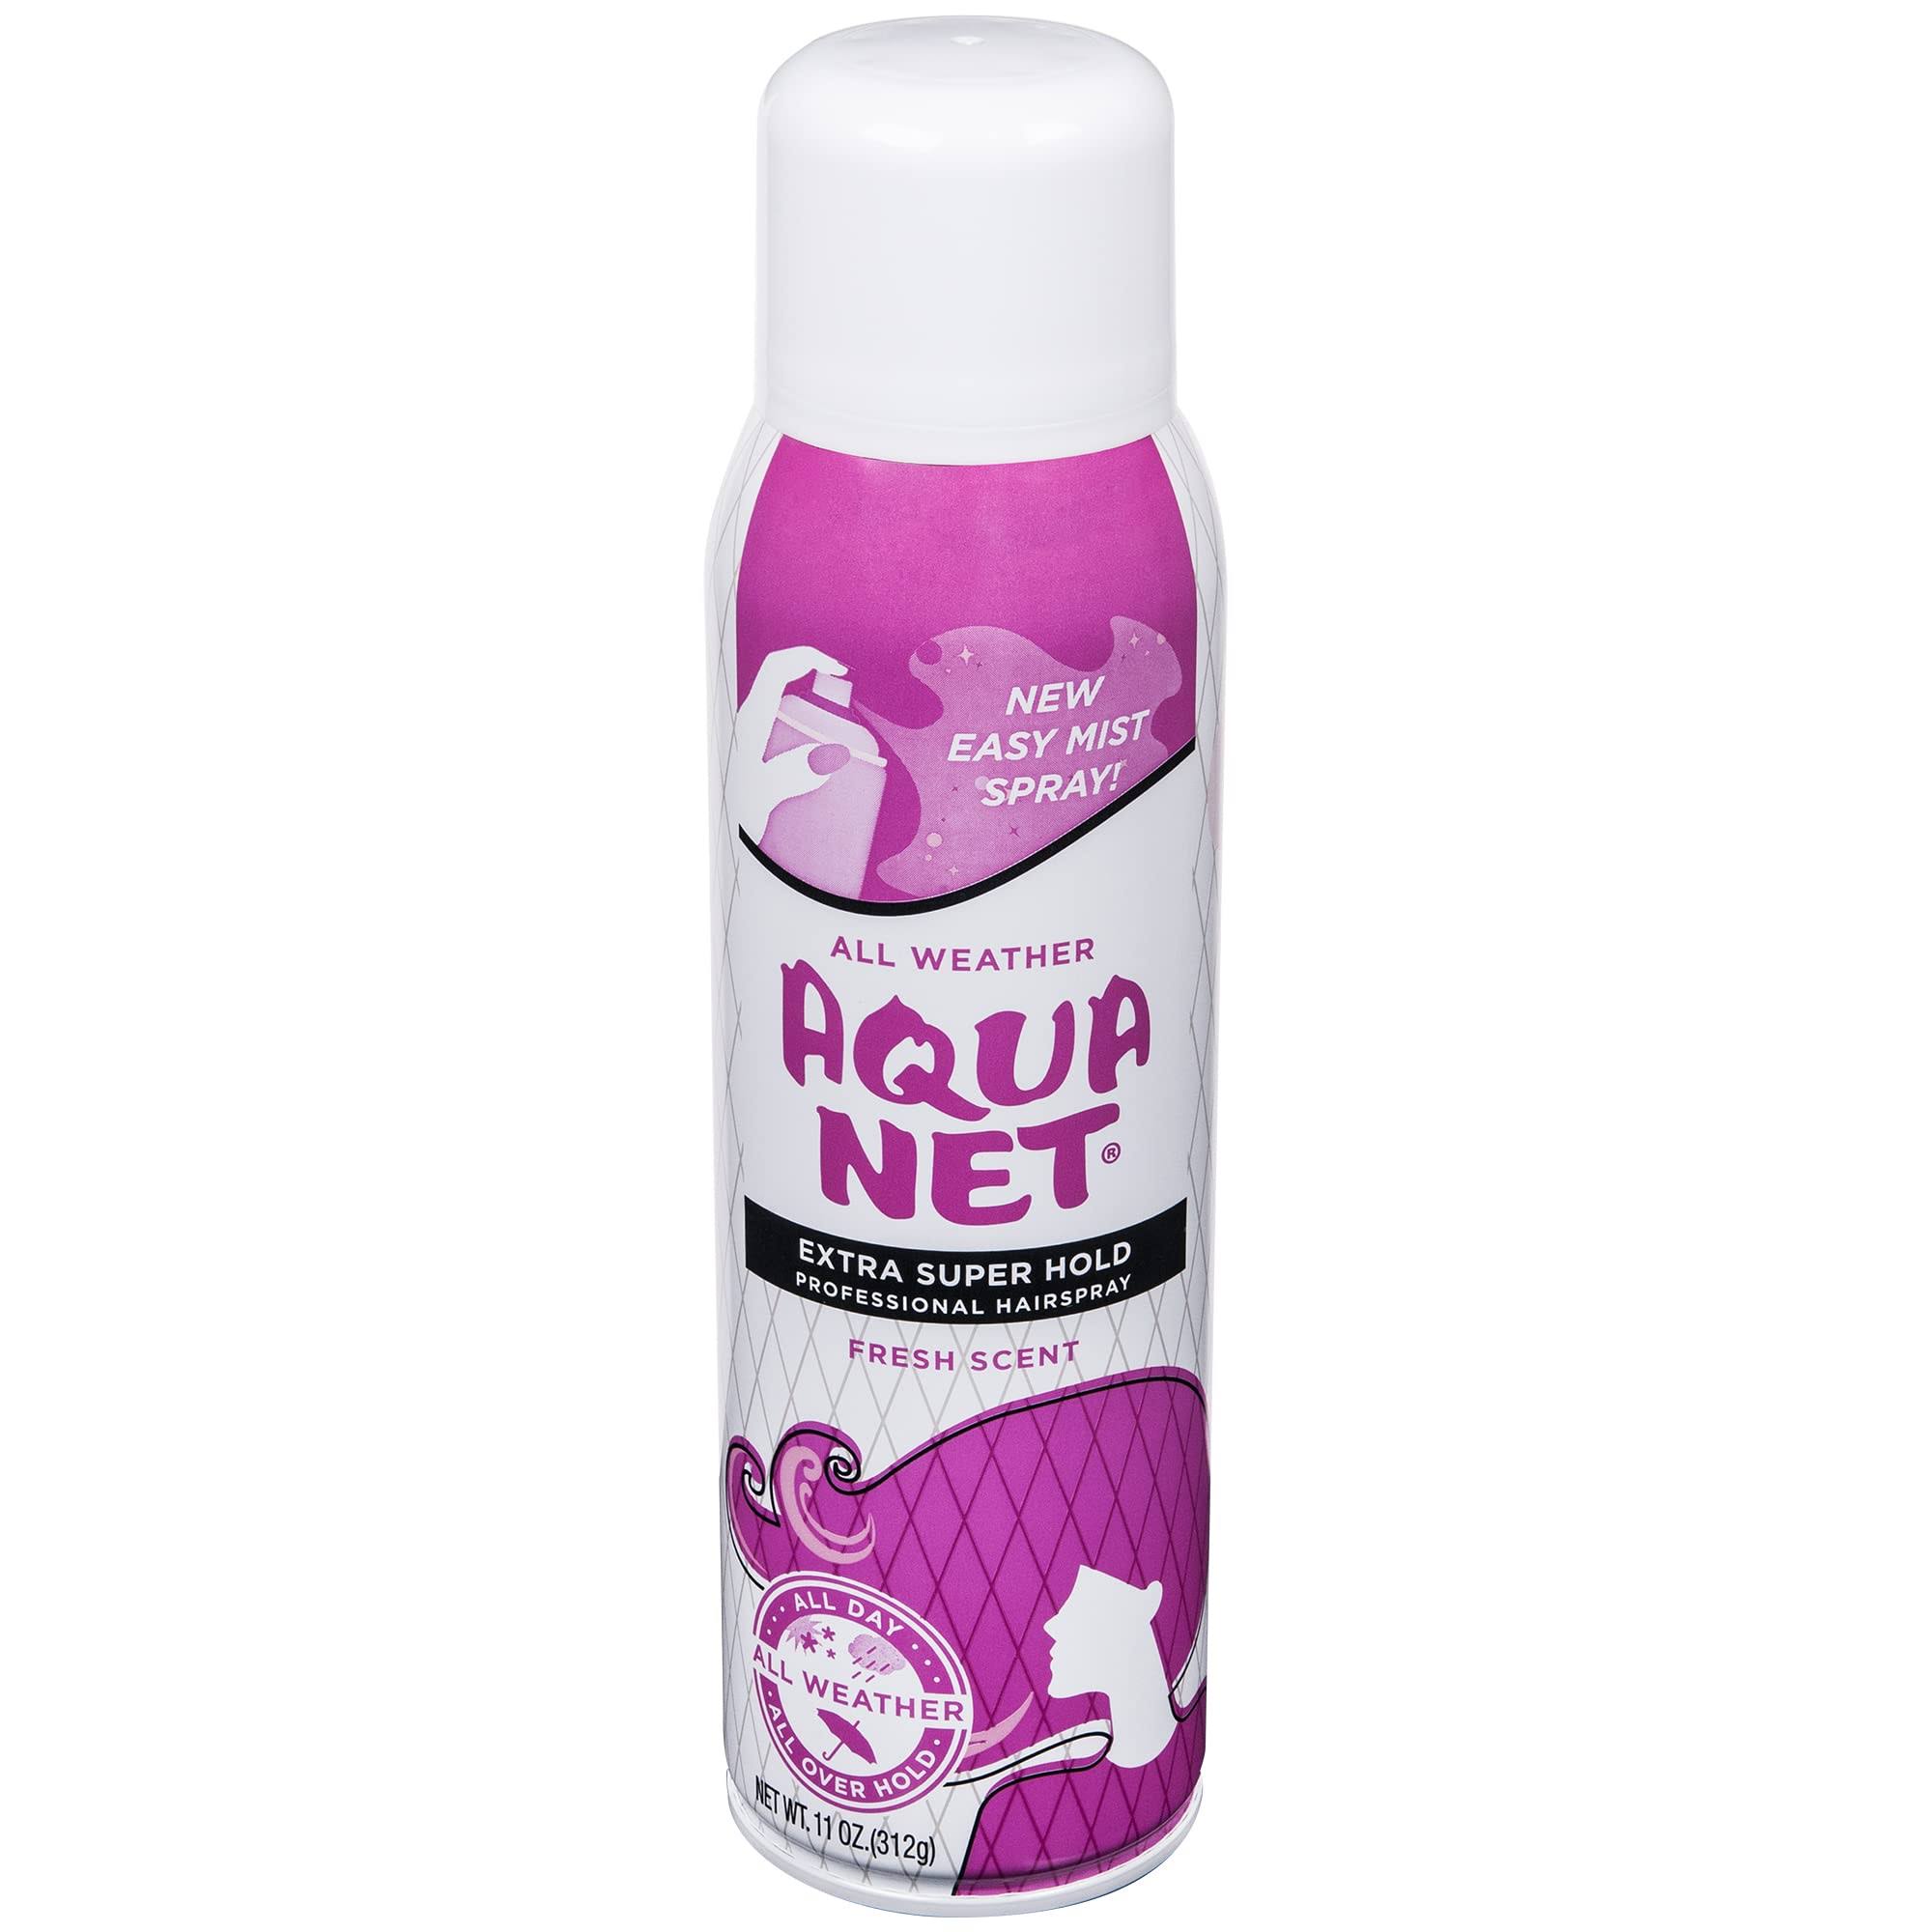 Aqua Net Professional Hair Spray - Extra Super Hold